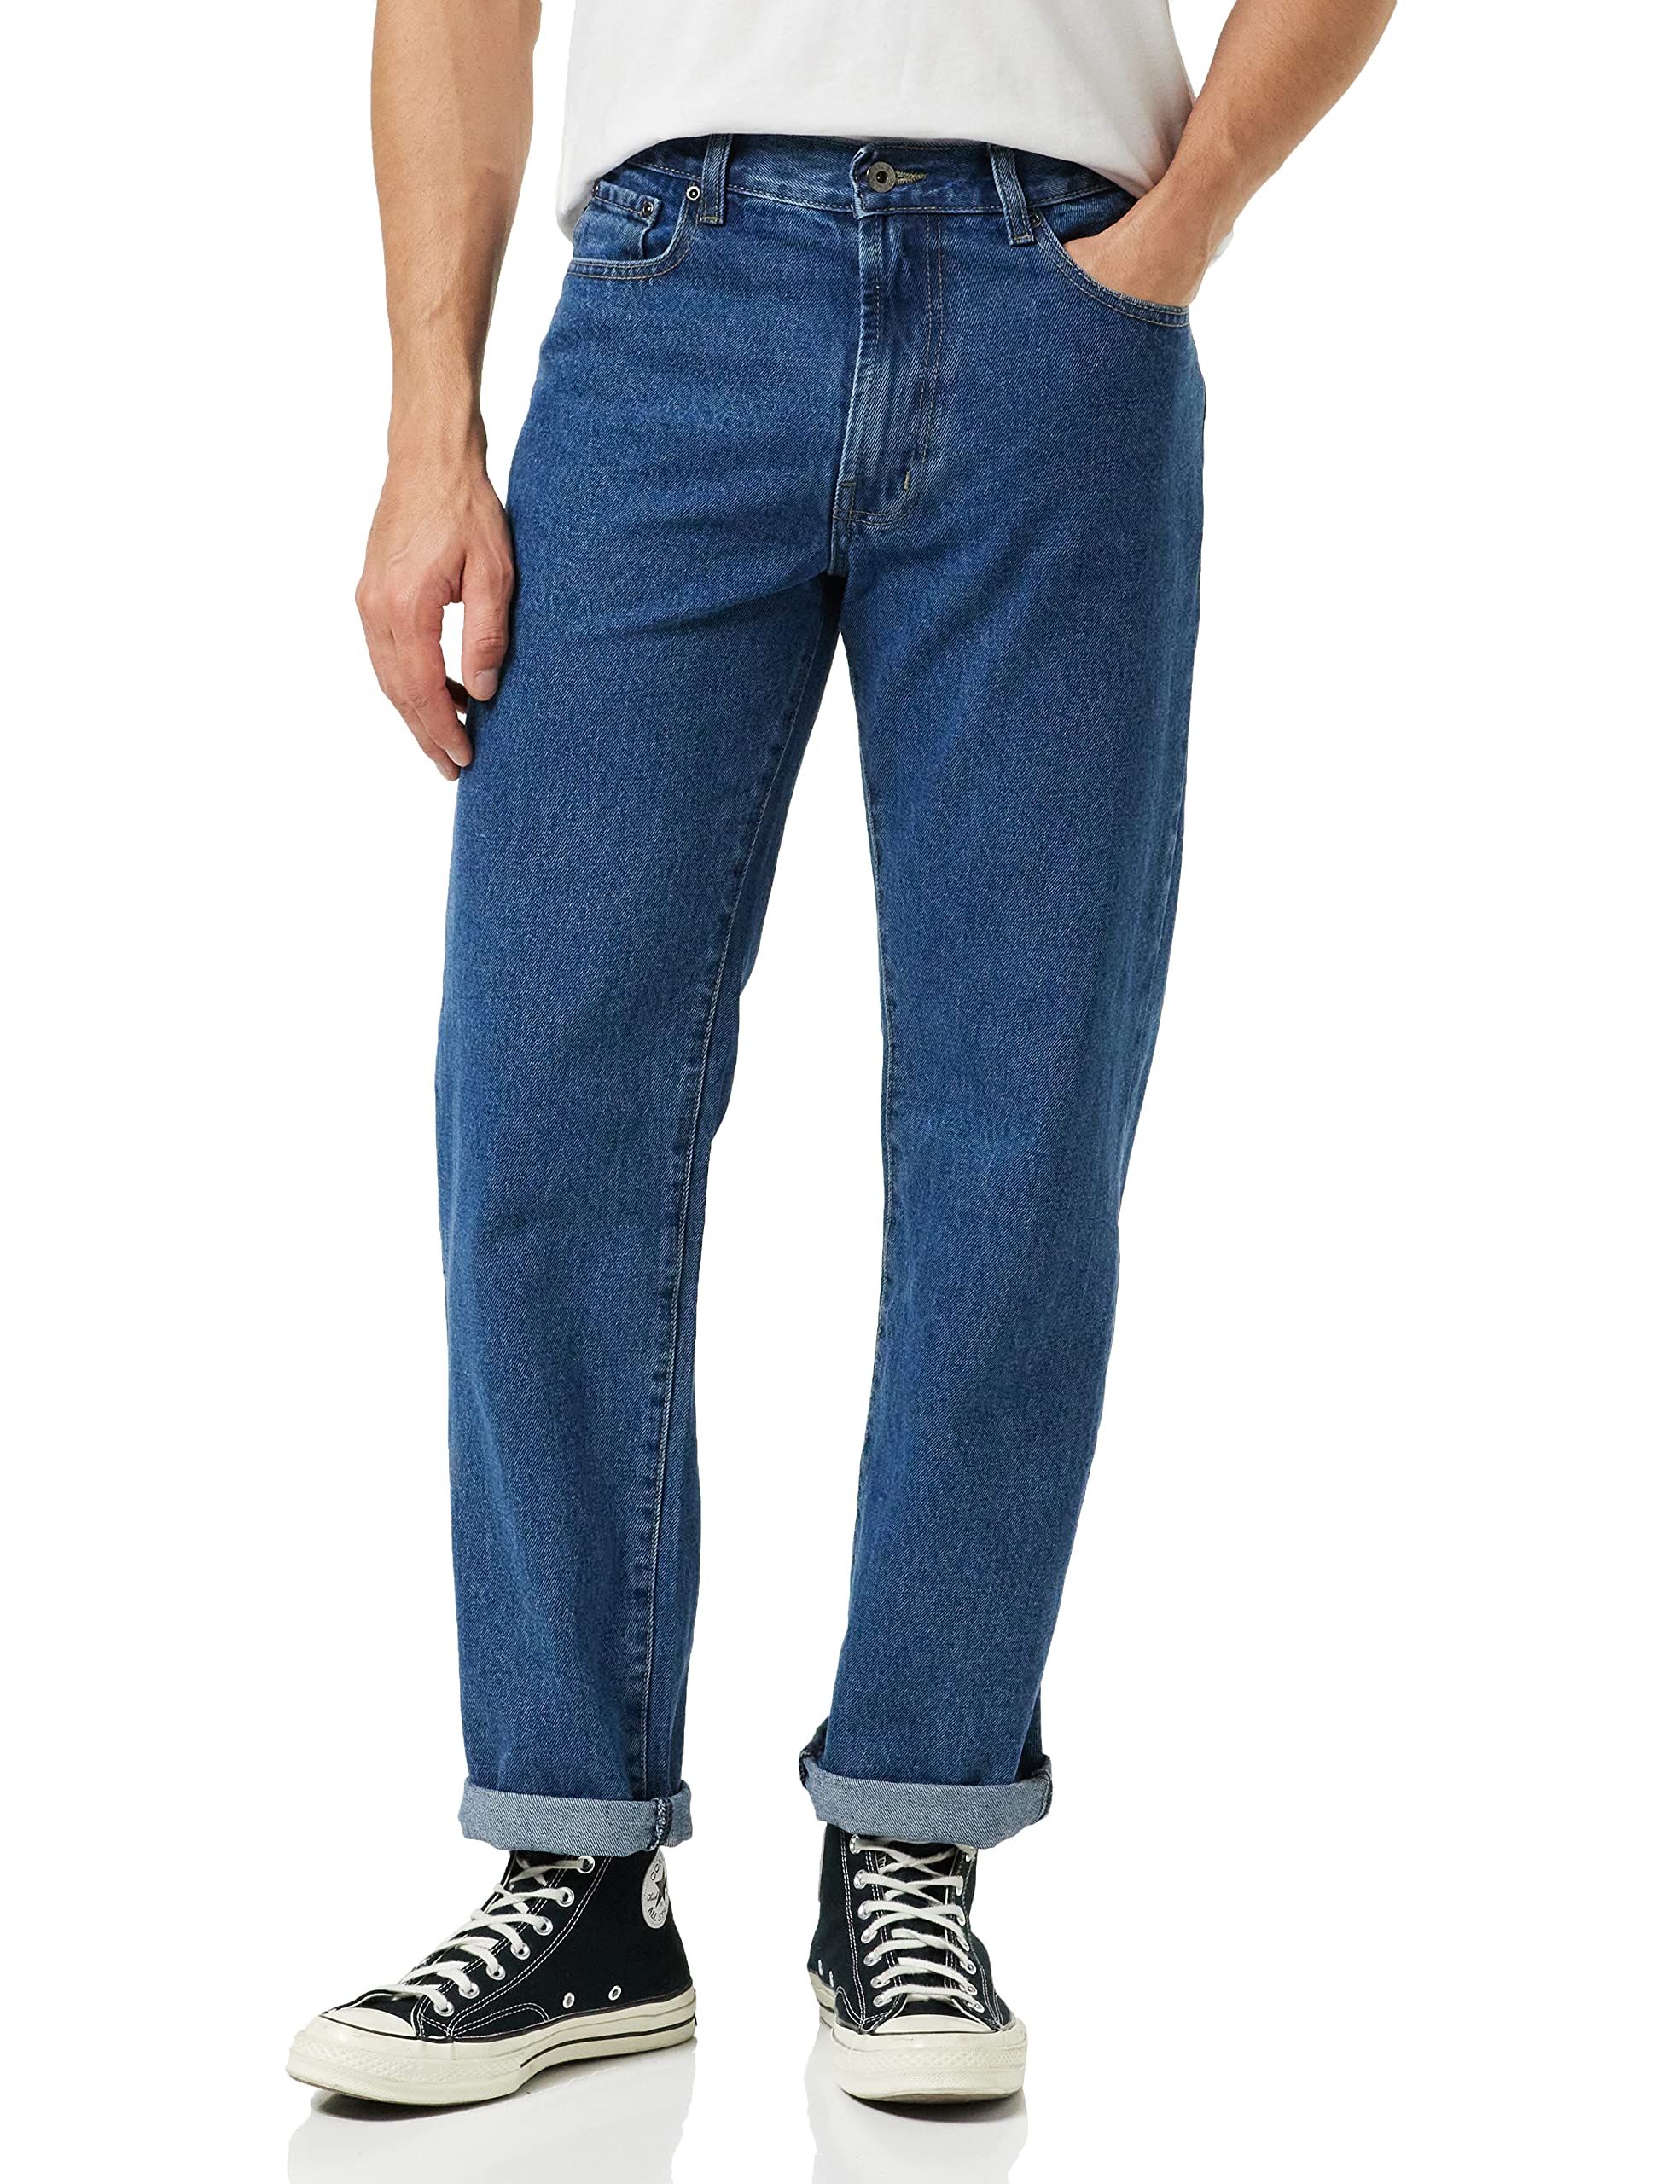 Enzo Herren Straight Jeans, Blau (Stonewash Blue), 48 S